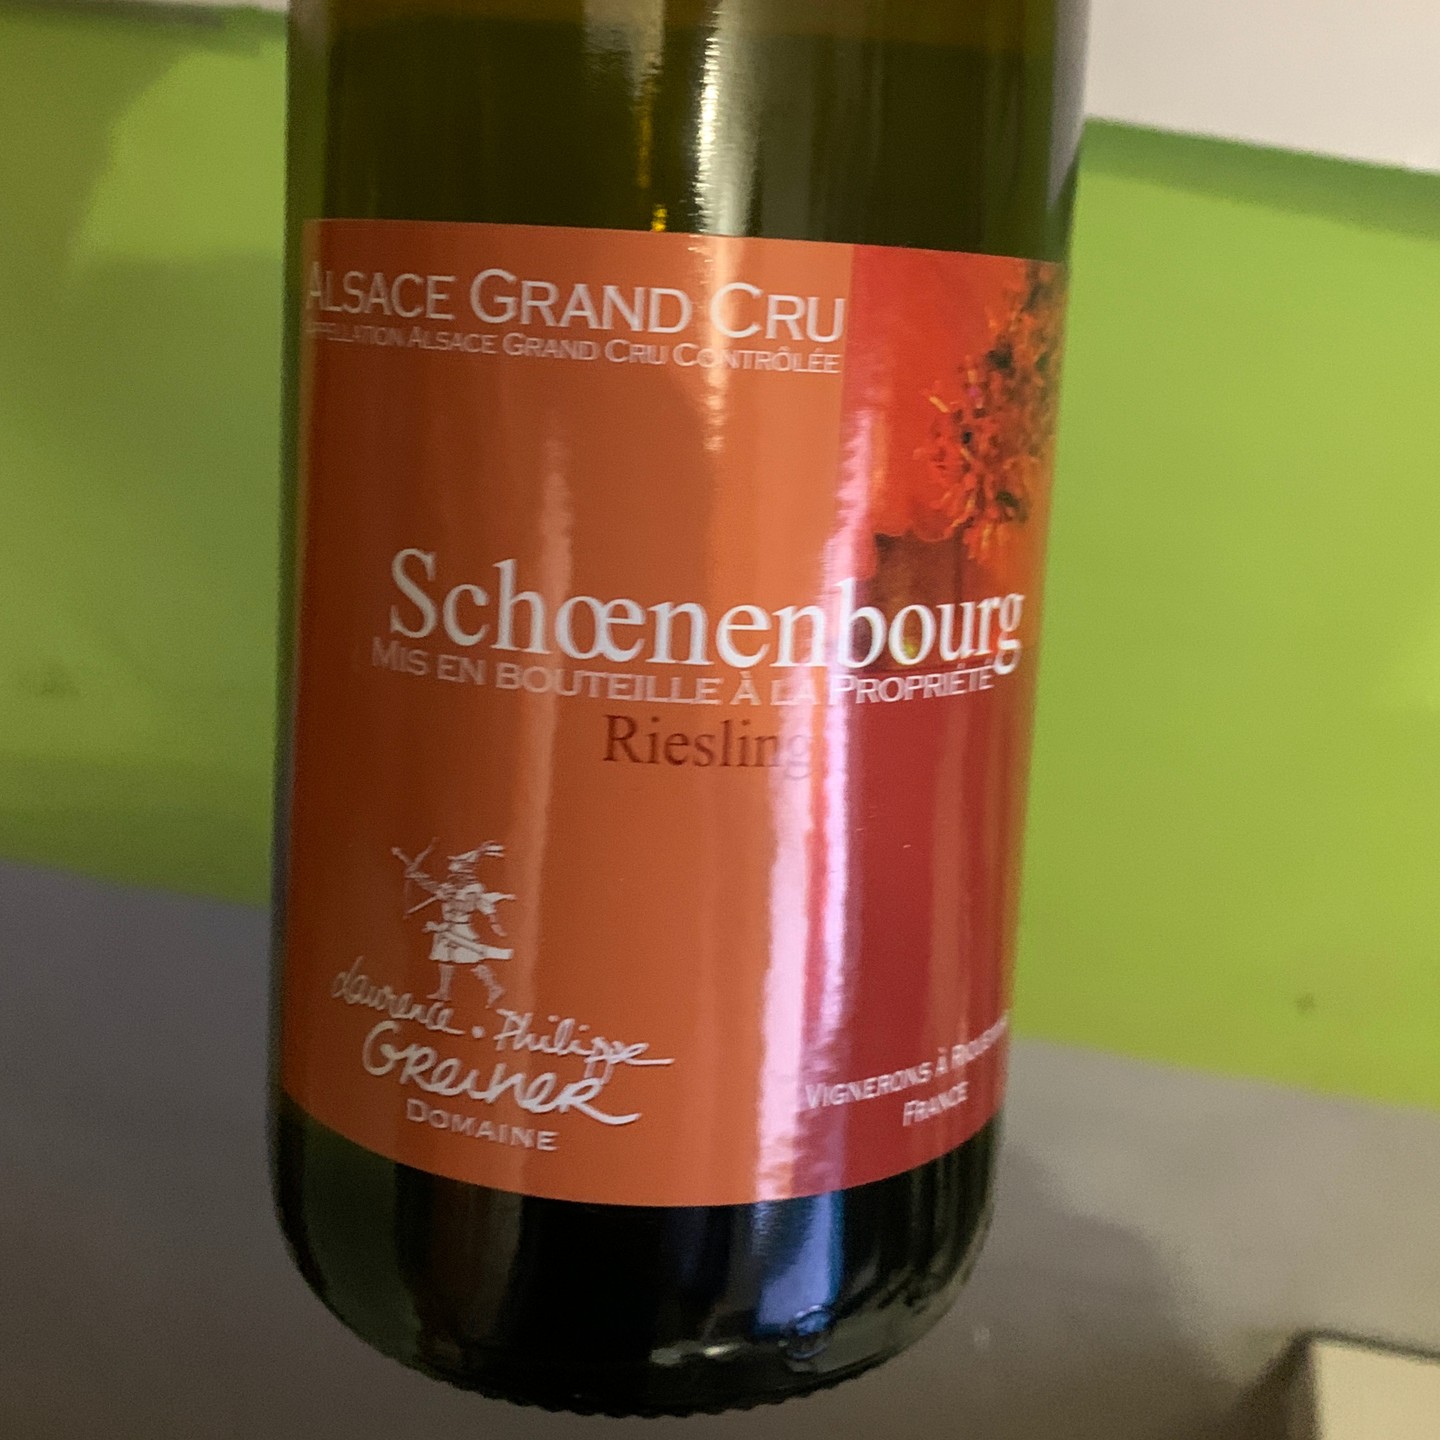 bouteille de vin blanc riesling schoenenbourg du domaine greiner